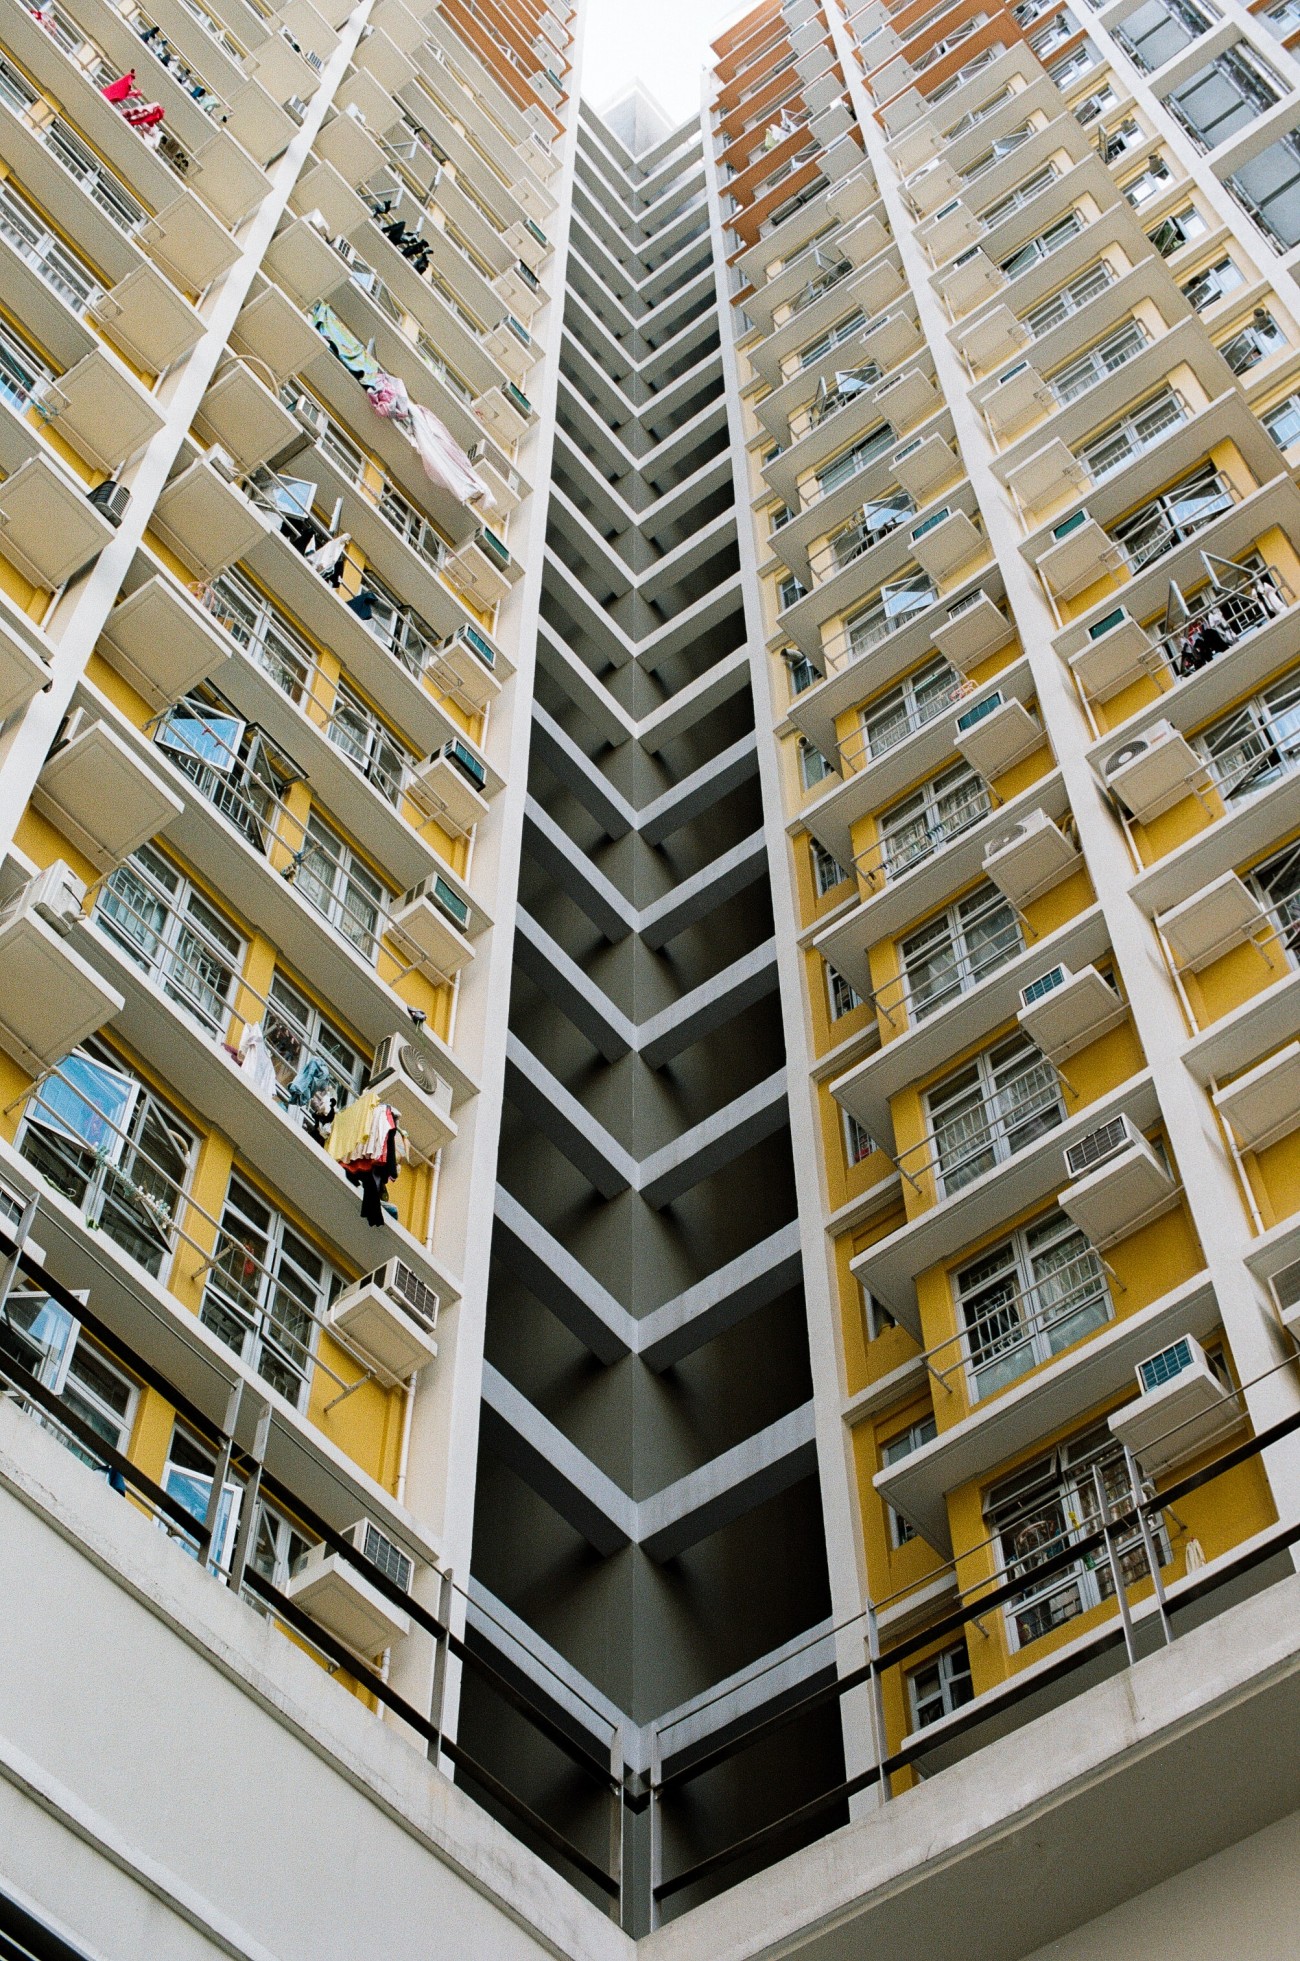 upward looking angle of multifamily housing